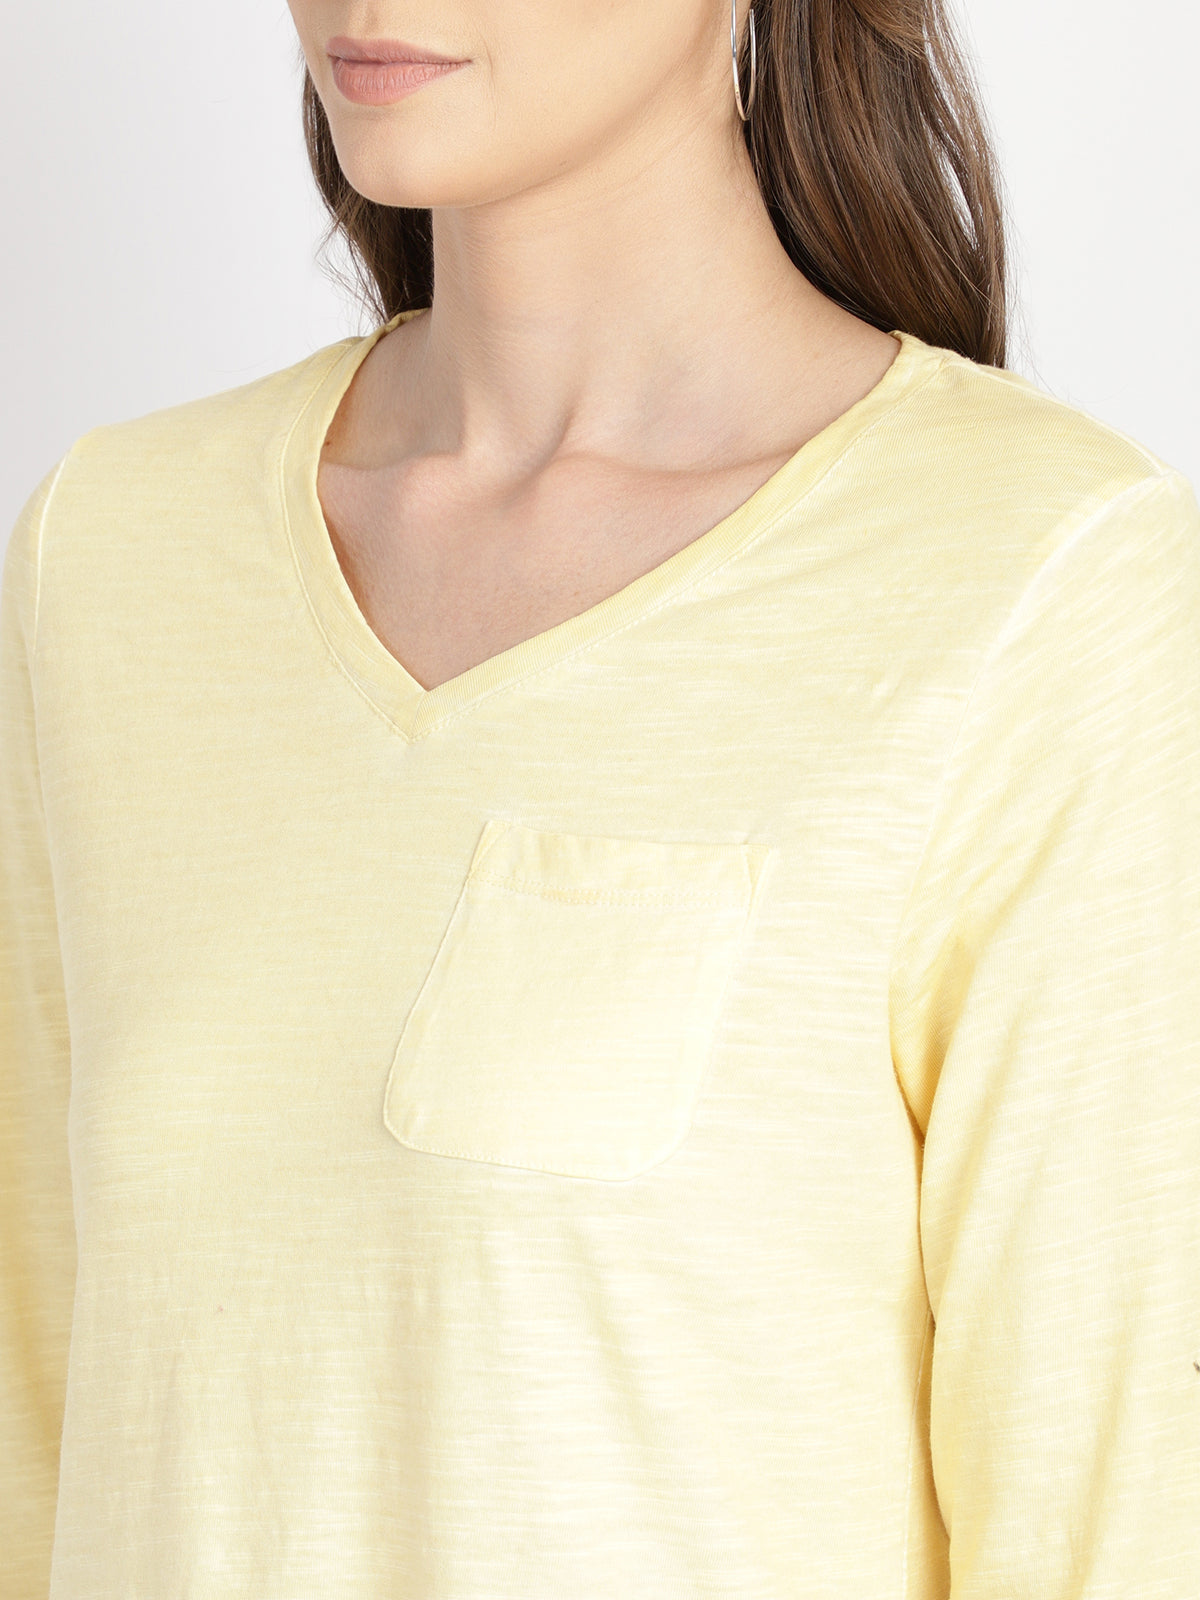 Yellow cotton t-shirt